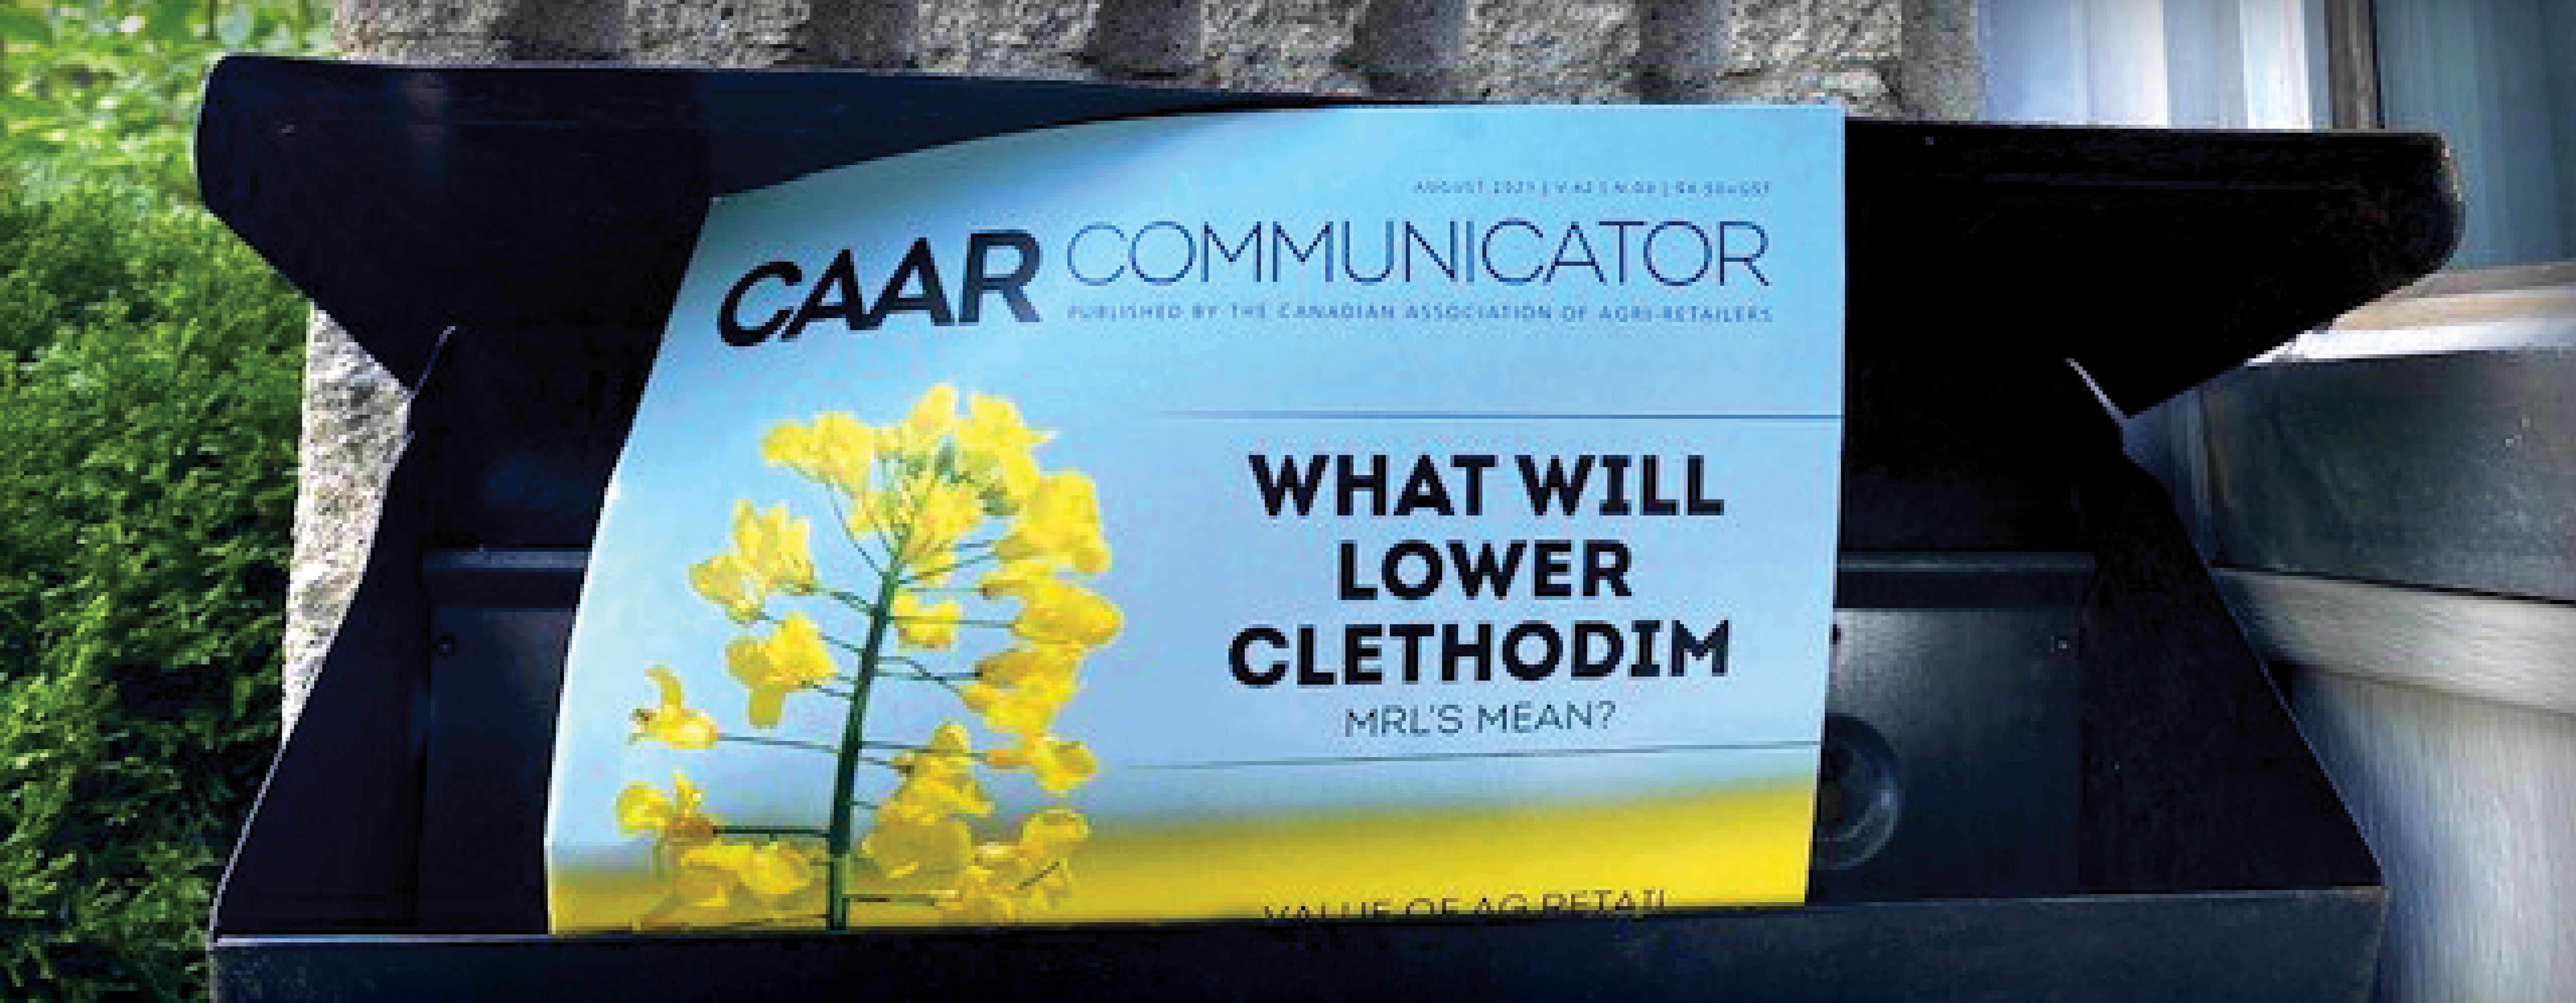 Banner for CAAR Communicator August Issue